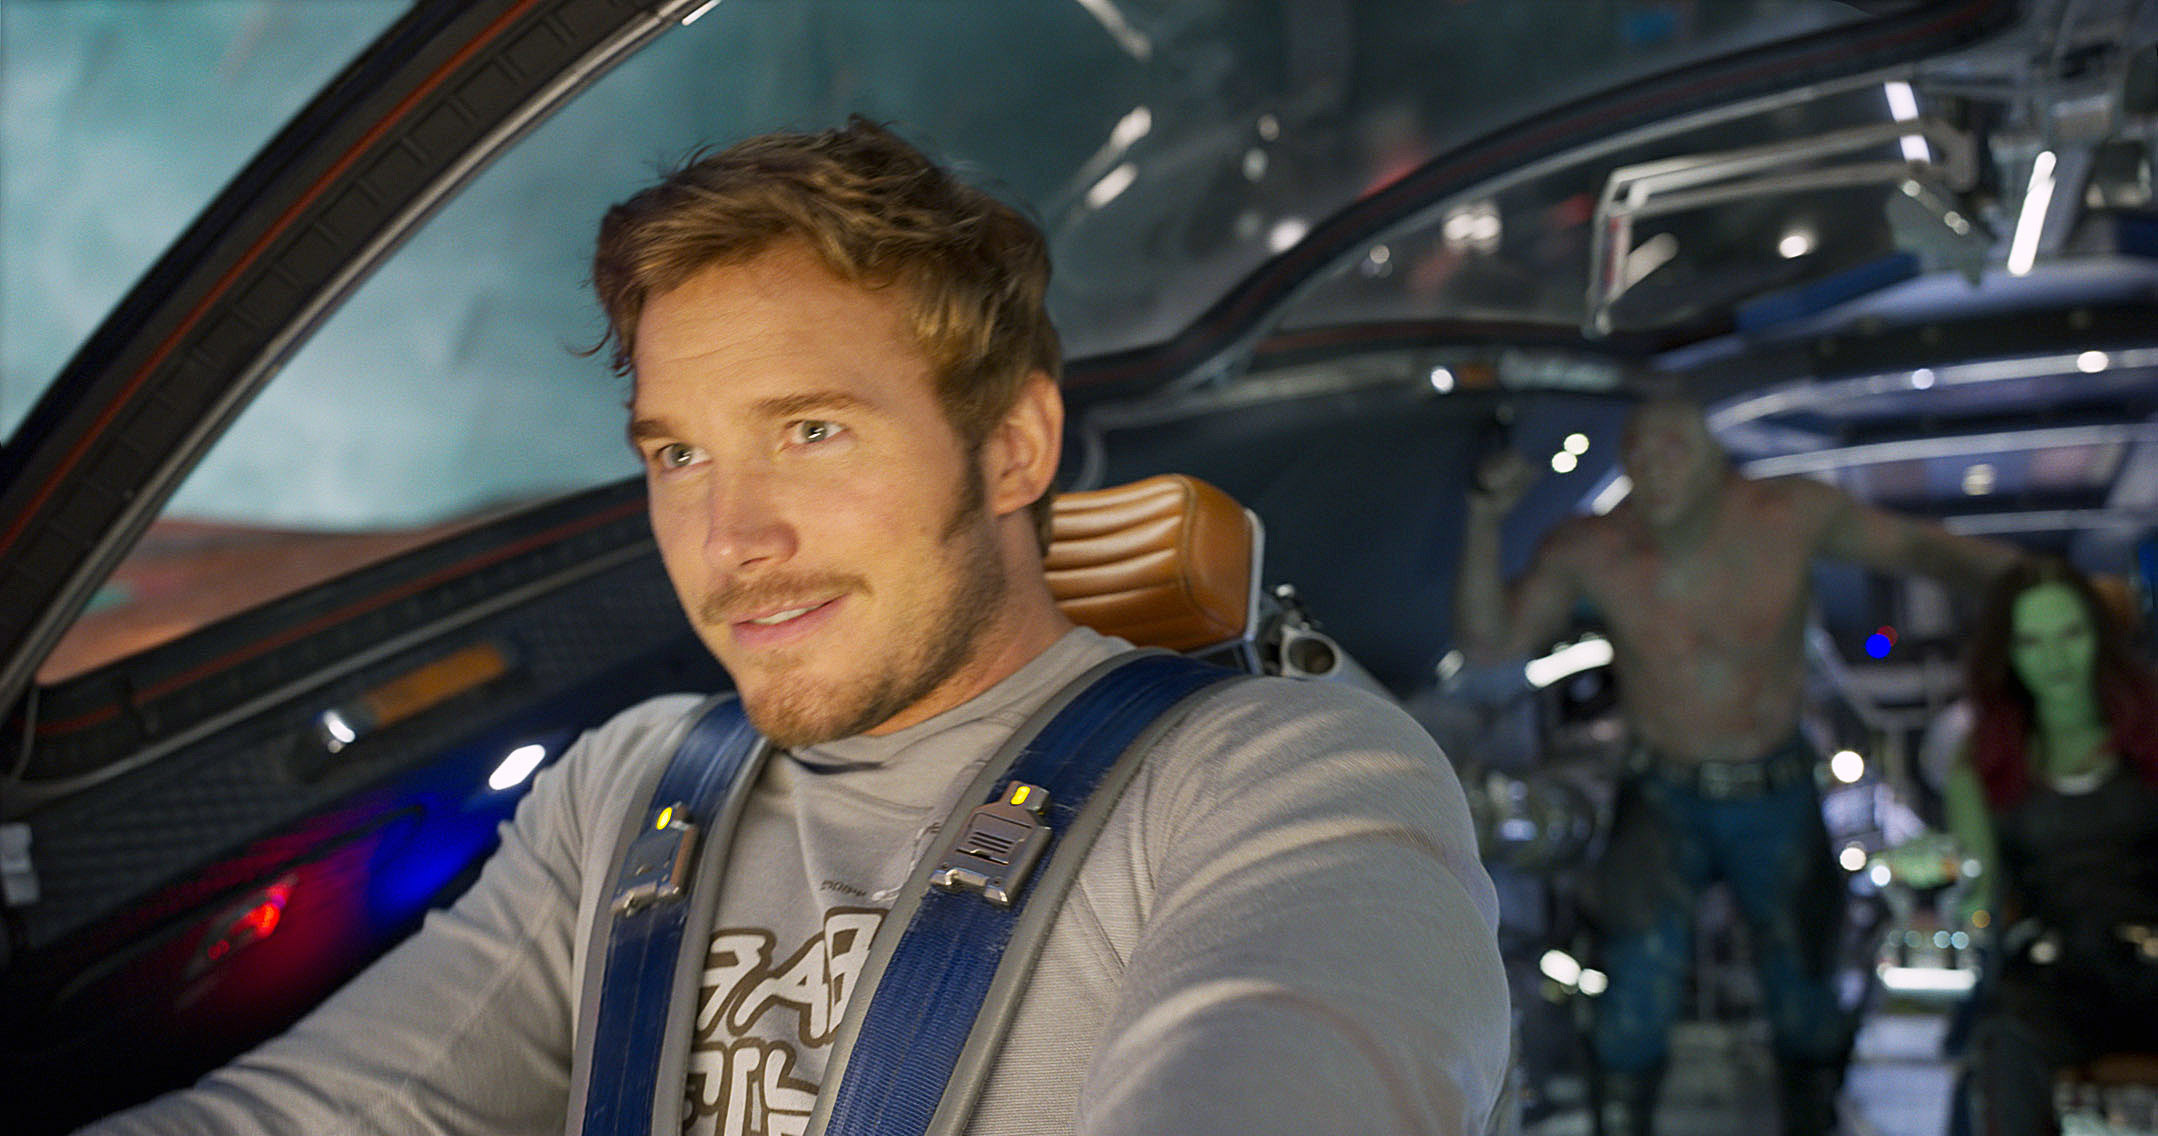 Pratt smiles while flying a spaceship